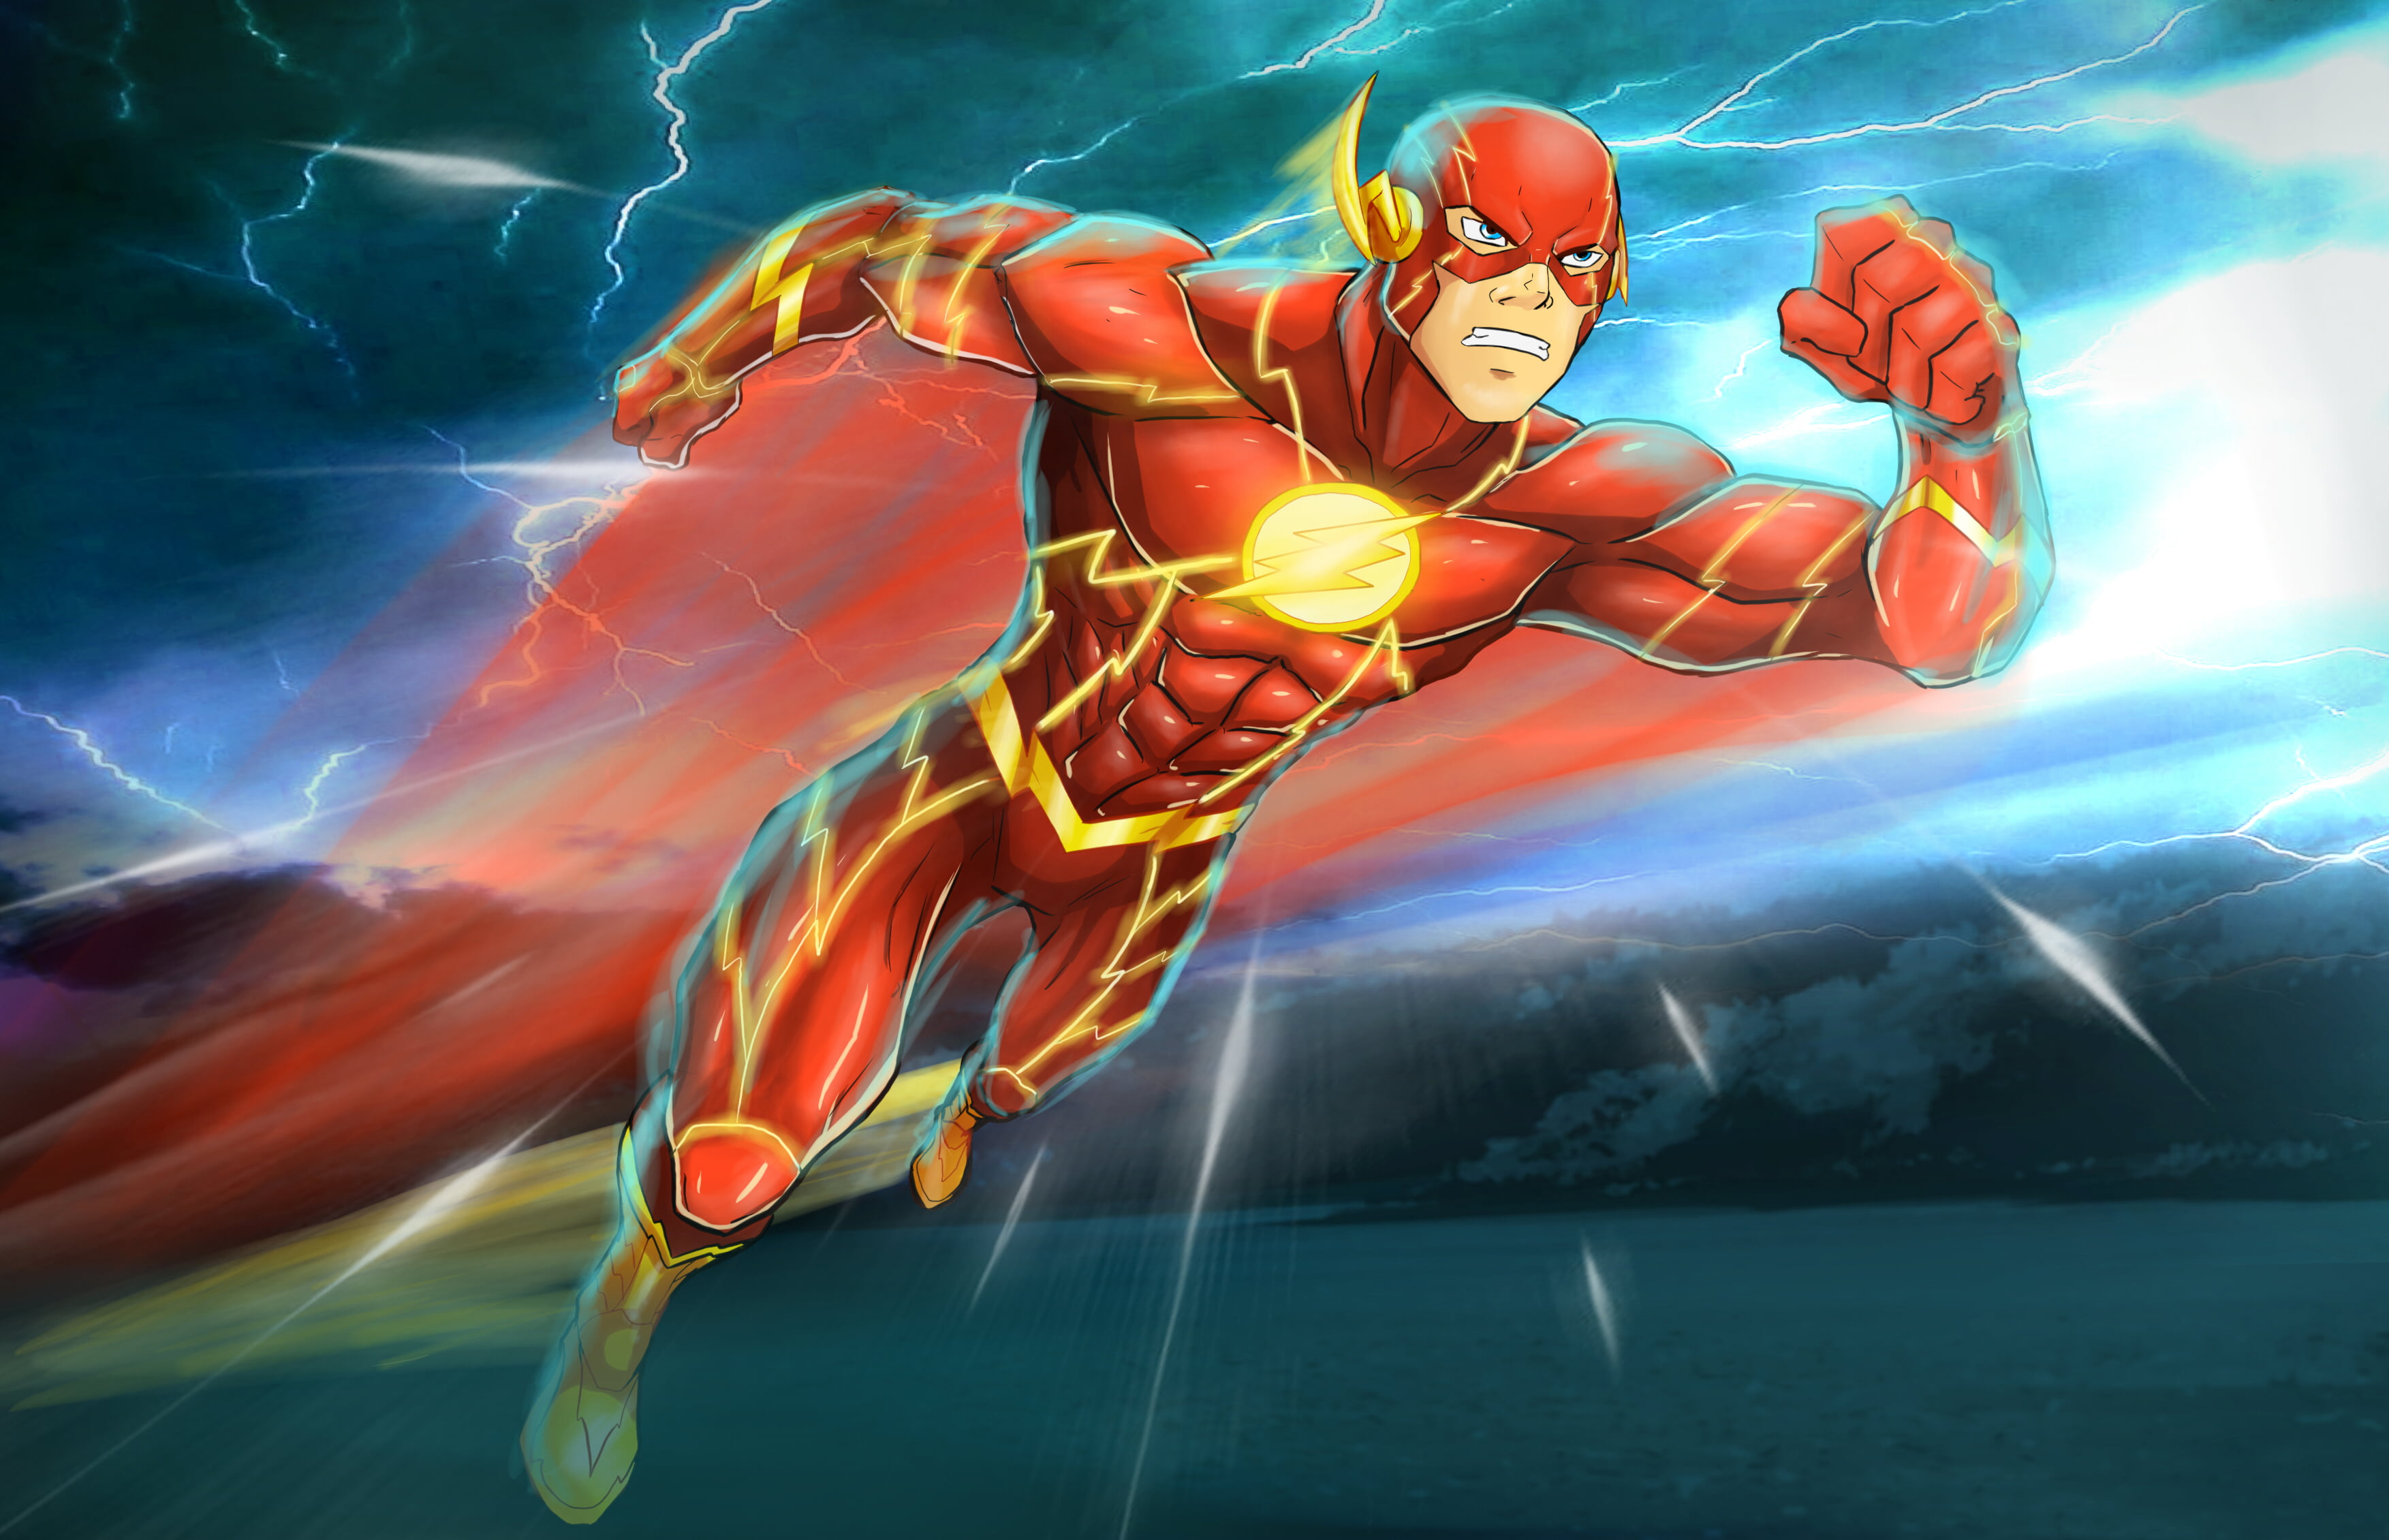 DC The Flash illustration, costume, superhero, DC Comics, Barry Allen